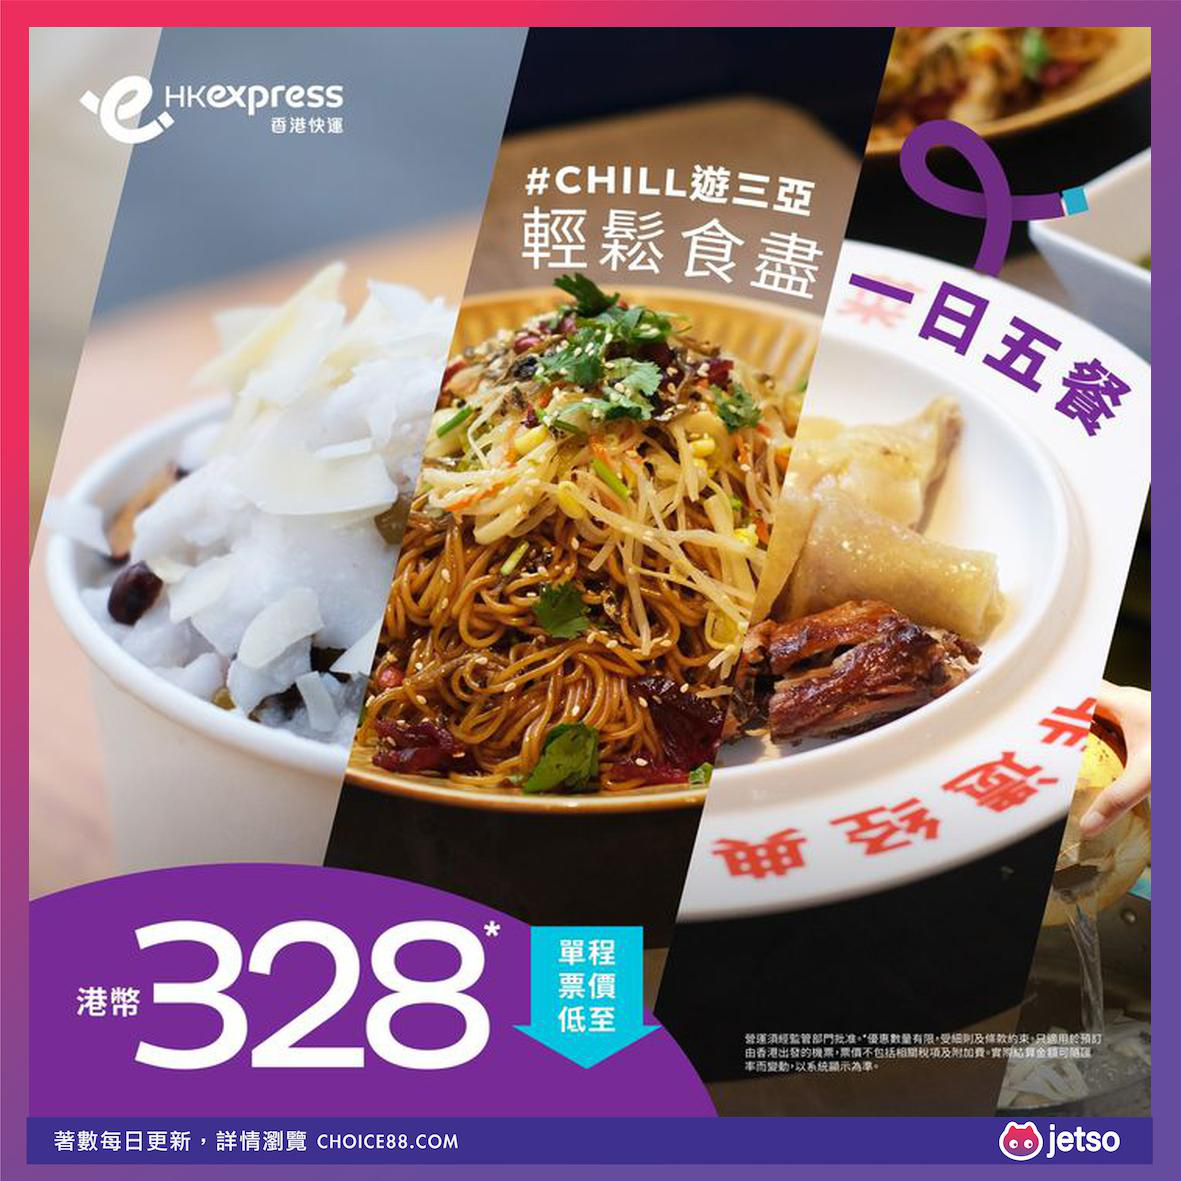 HK Express : [机票优惠]三亚直飞单程票价低至港币328